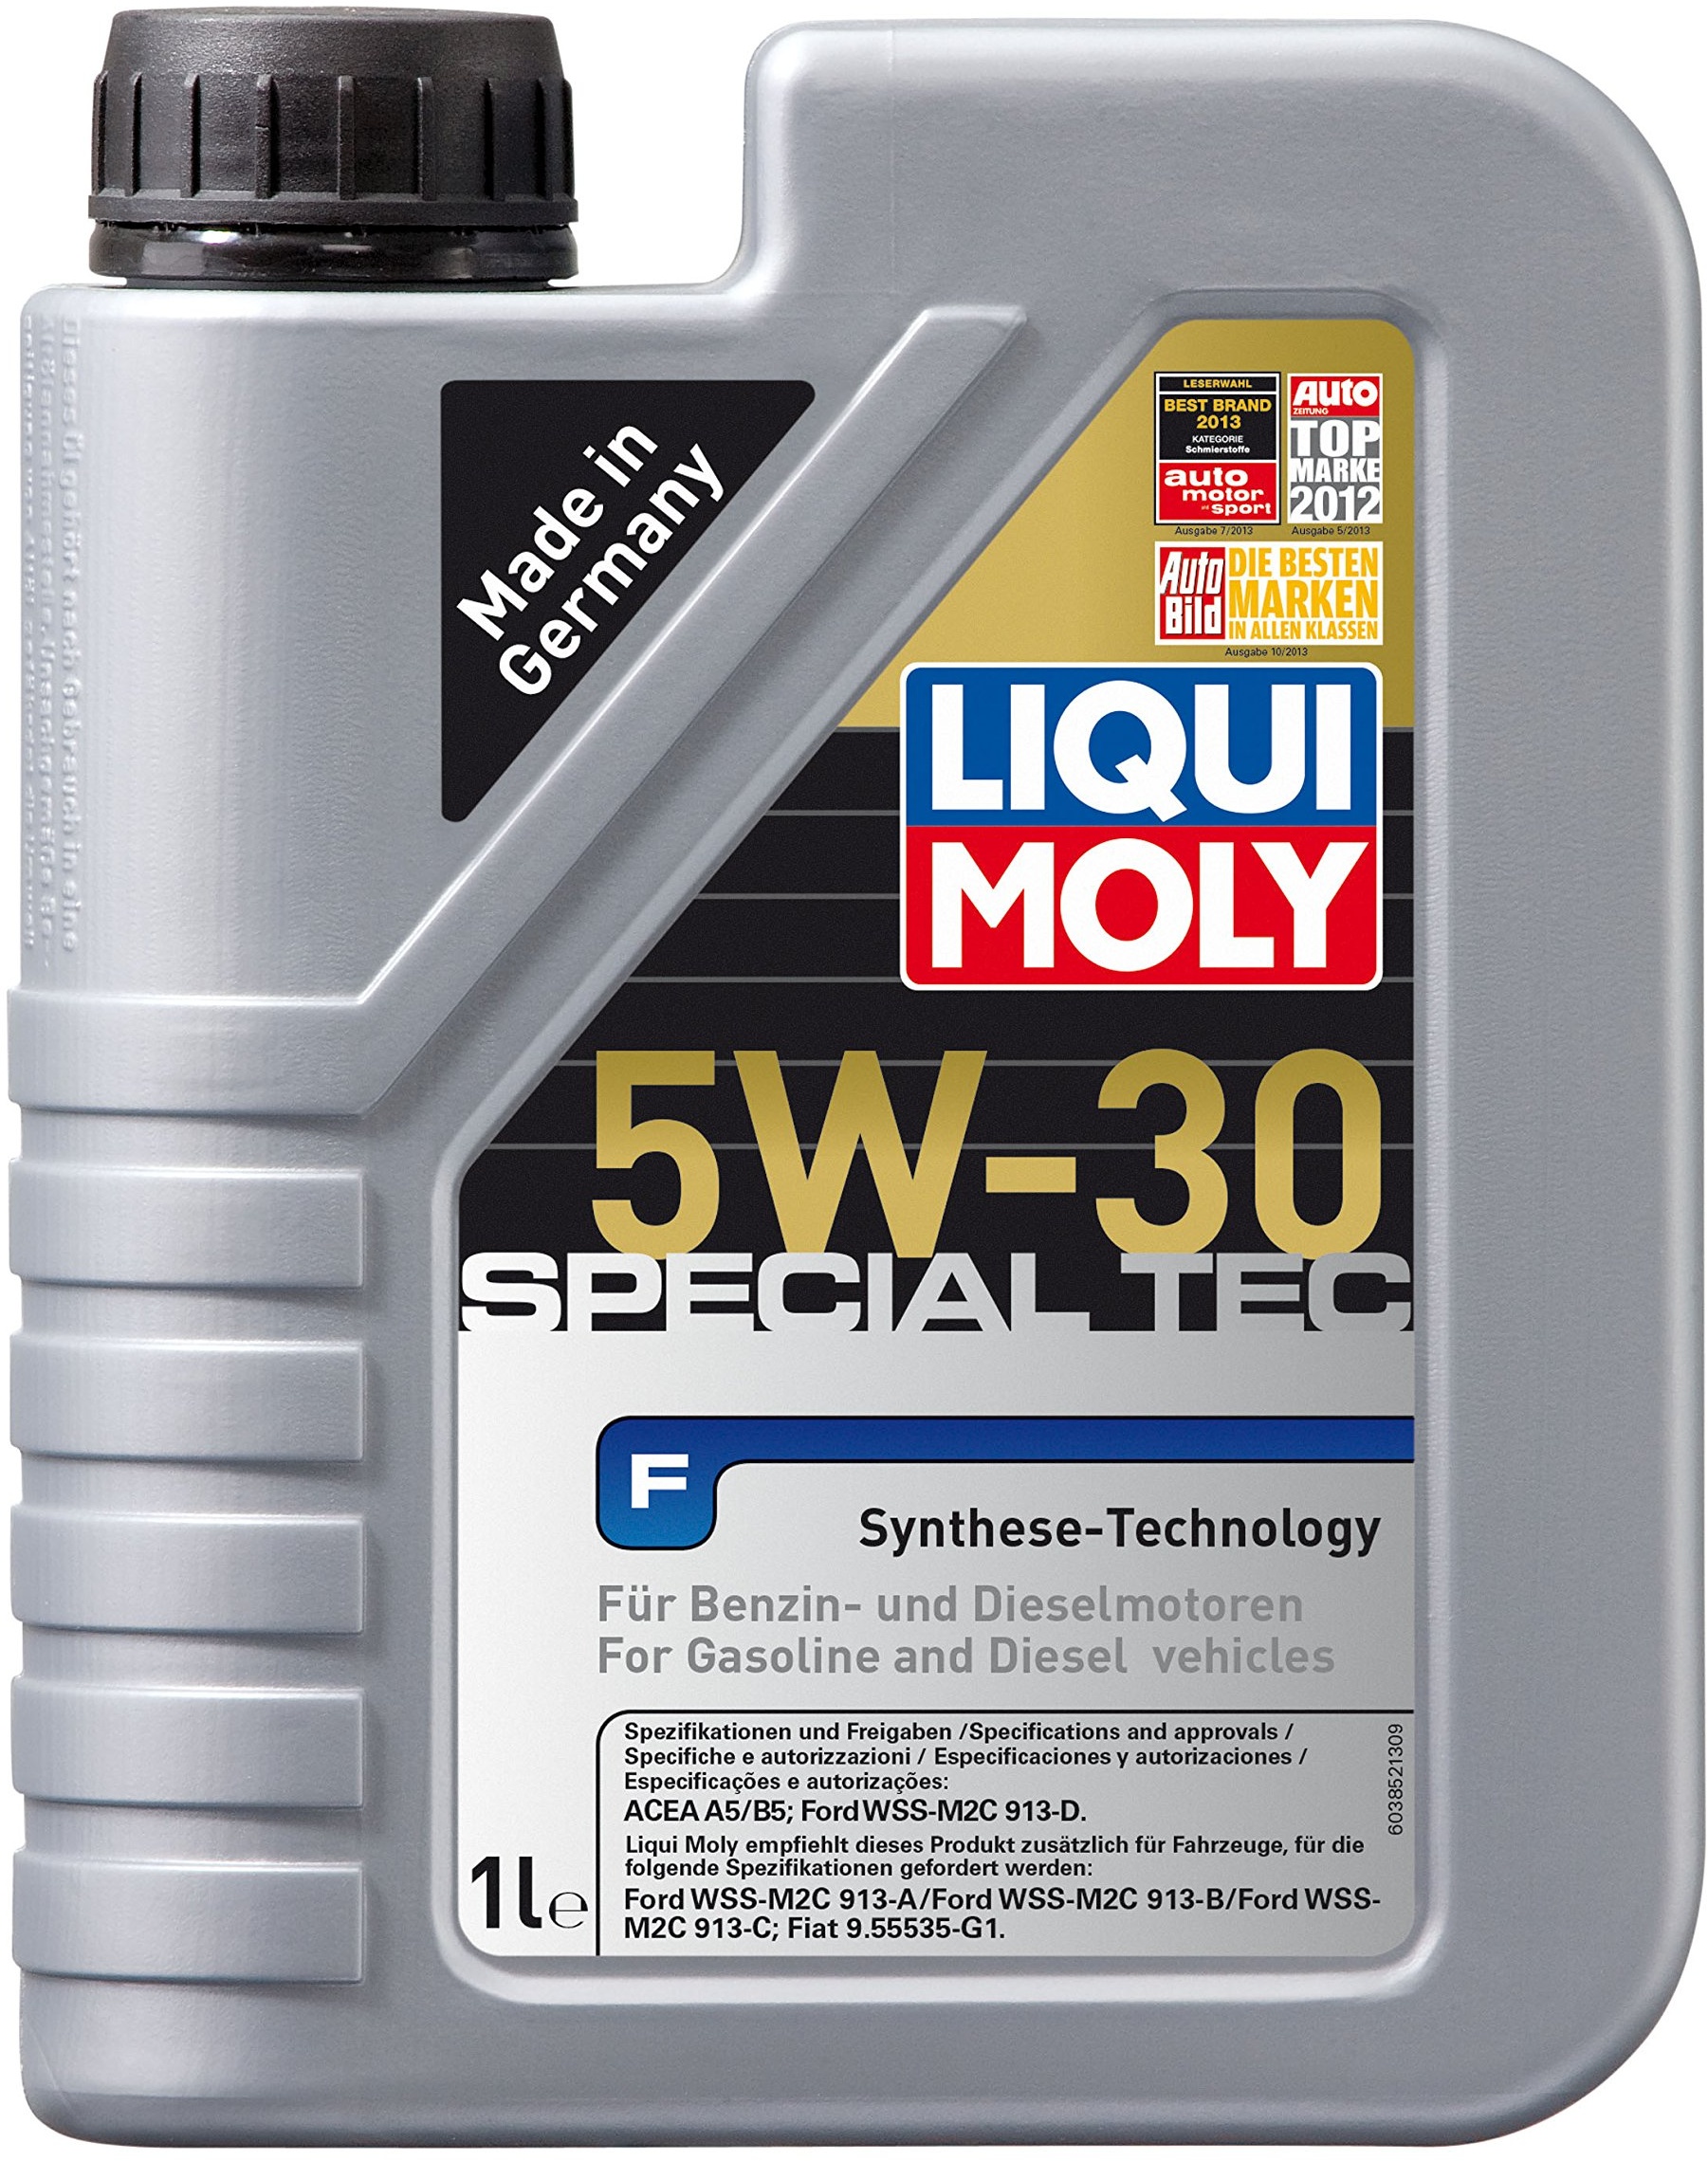 LIQUI MOLY Special Tec F 5W-30 | 1 L | Synthesetechnologie Motoröl | Art.-Nr.: 3852